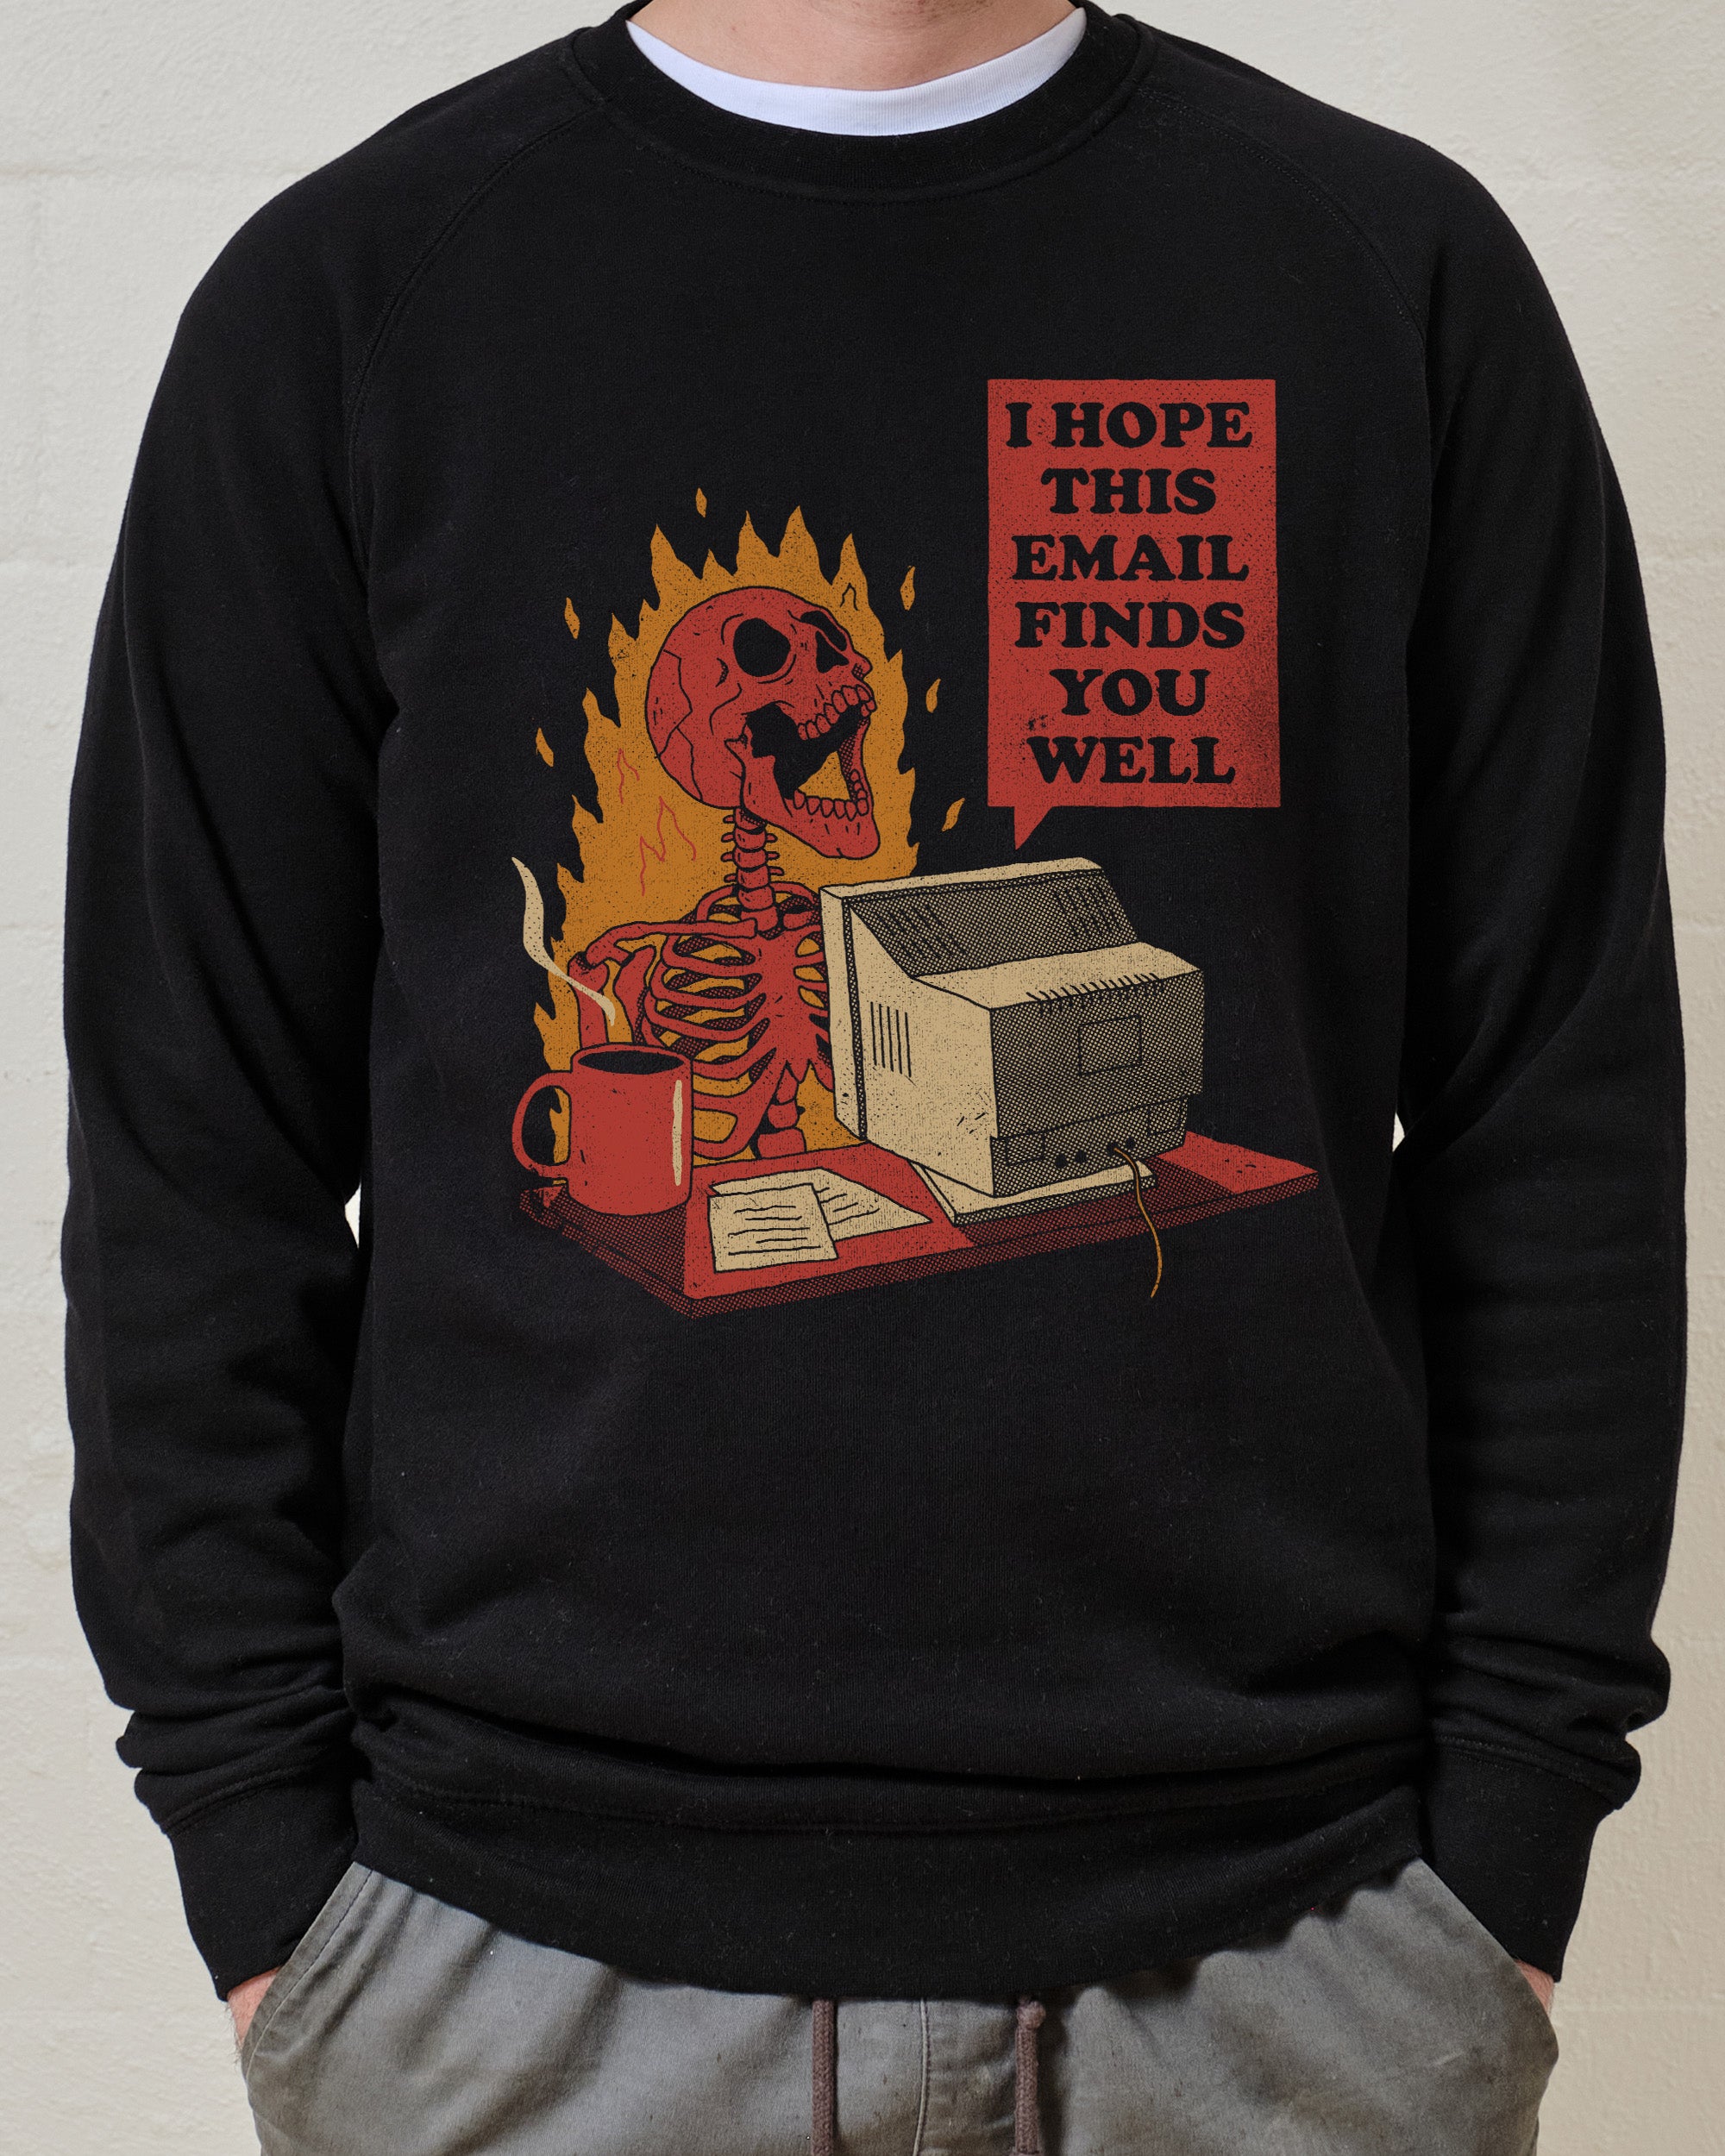 You Got Mail Sweater Australia Online